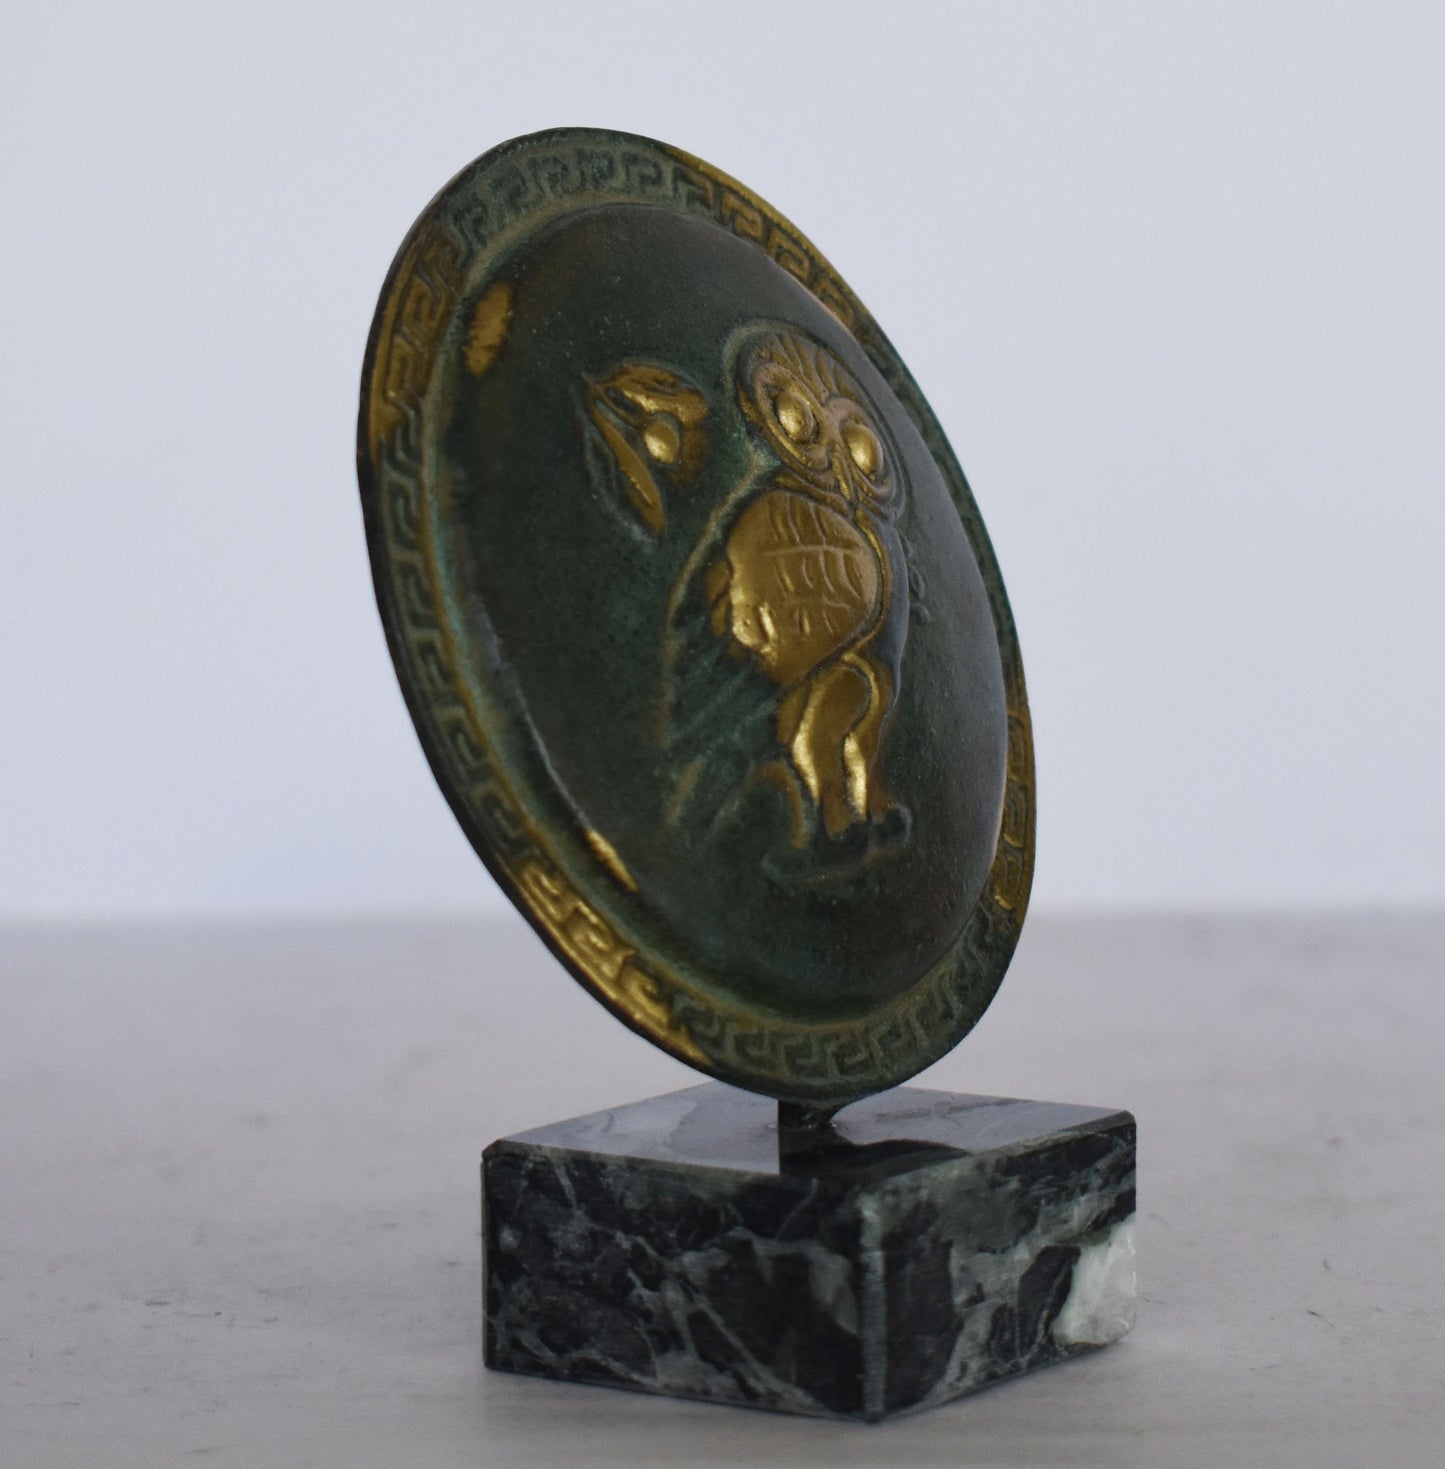 Ancient Greek Athenian Shield - Aspis - Owl symbol - marble base - Museum Replica - pure Bronze Sculpture